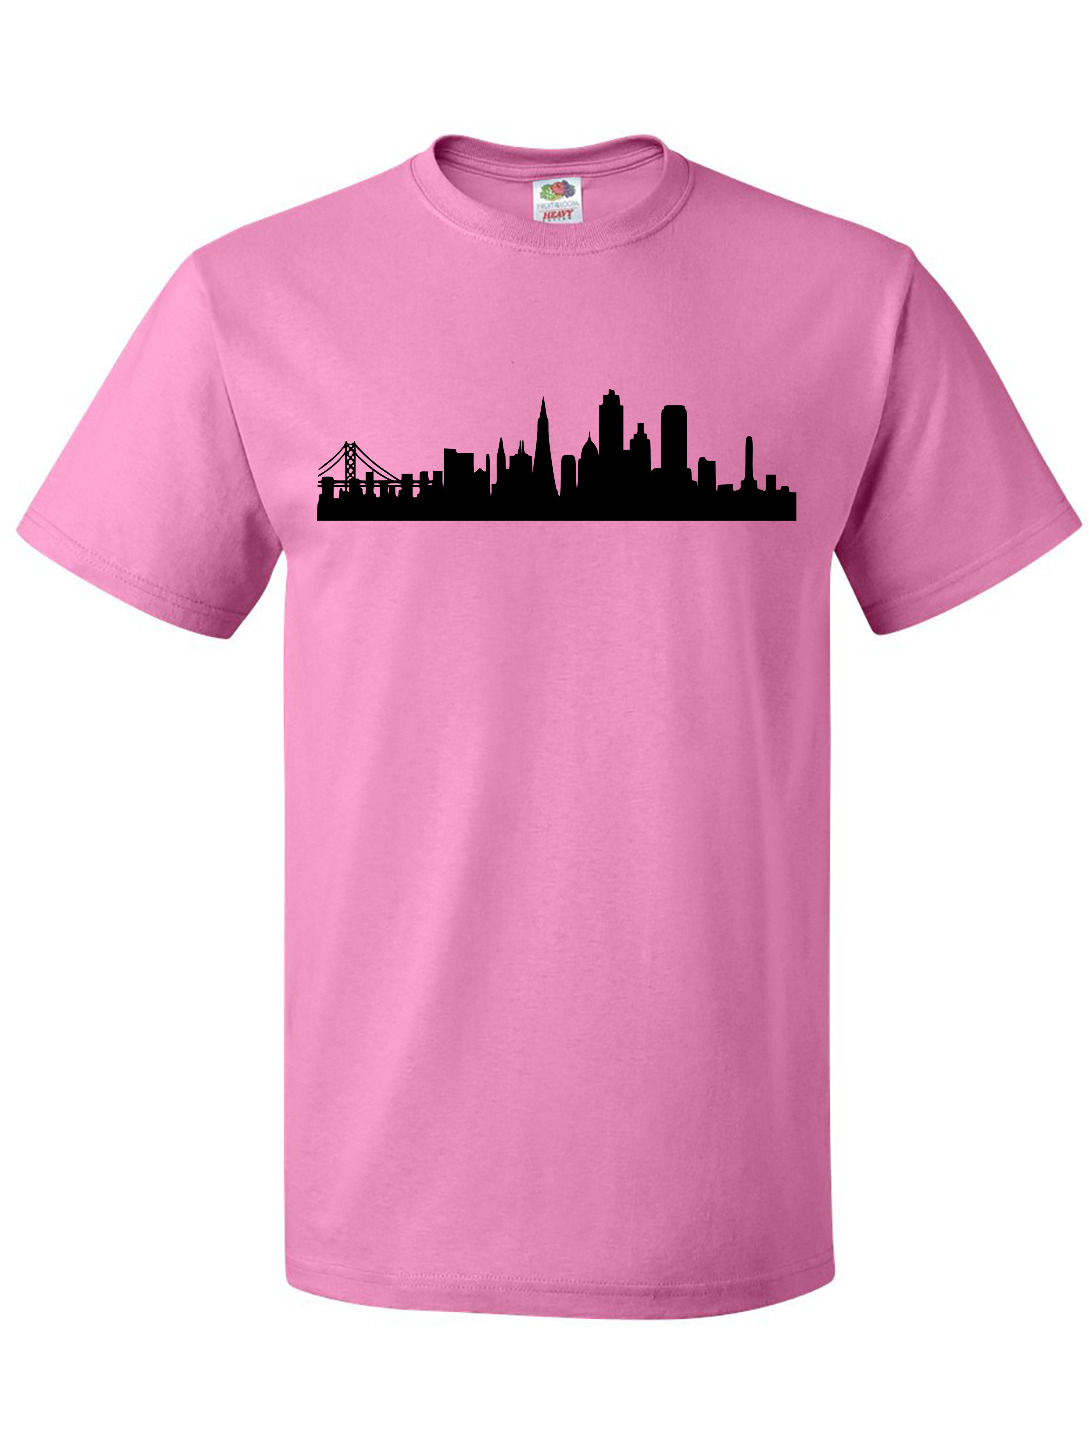 Inktastic San Francisco Skyline T-Shirt - image 1 of 4